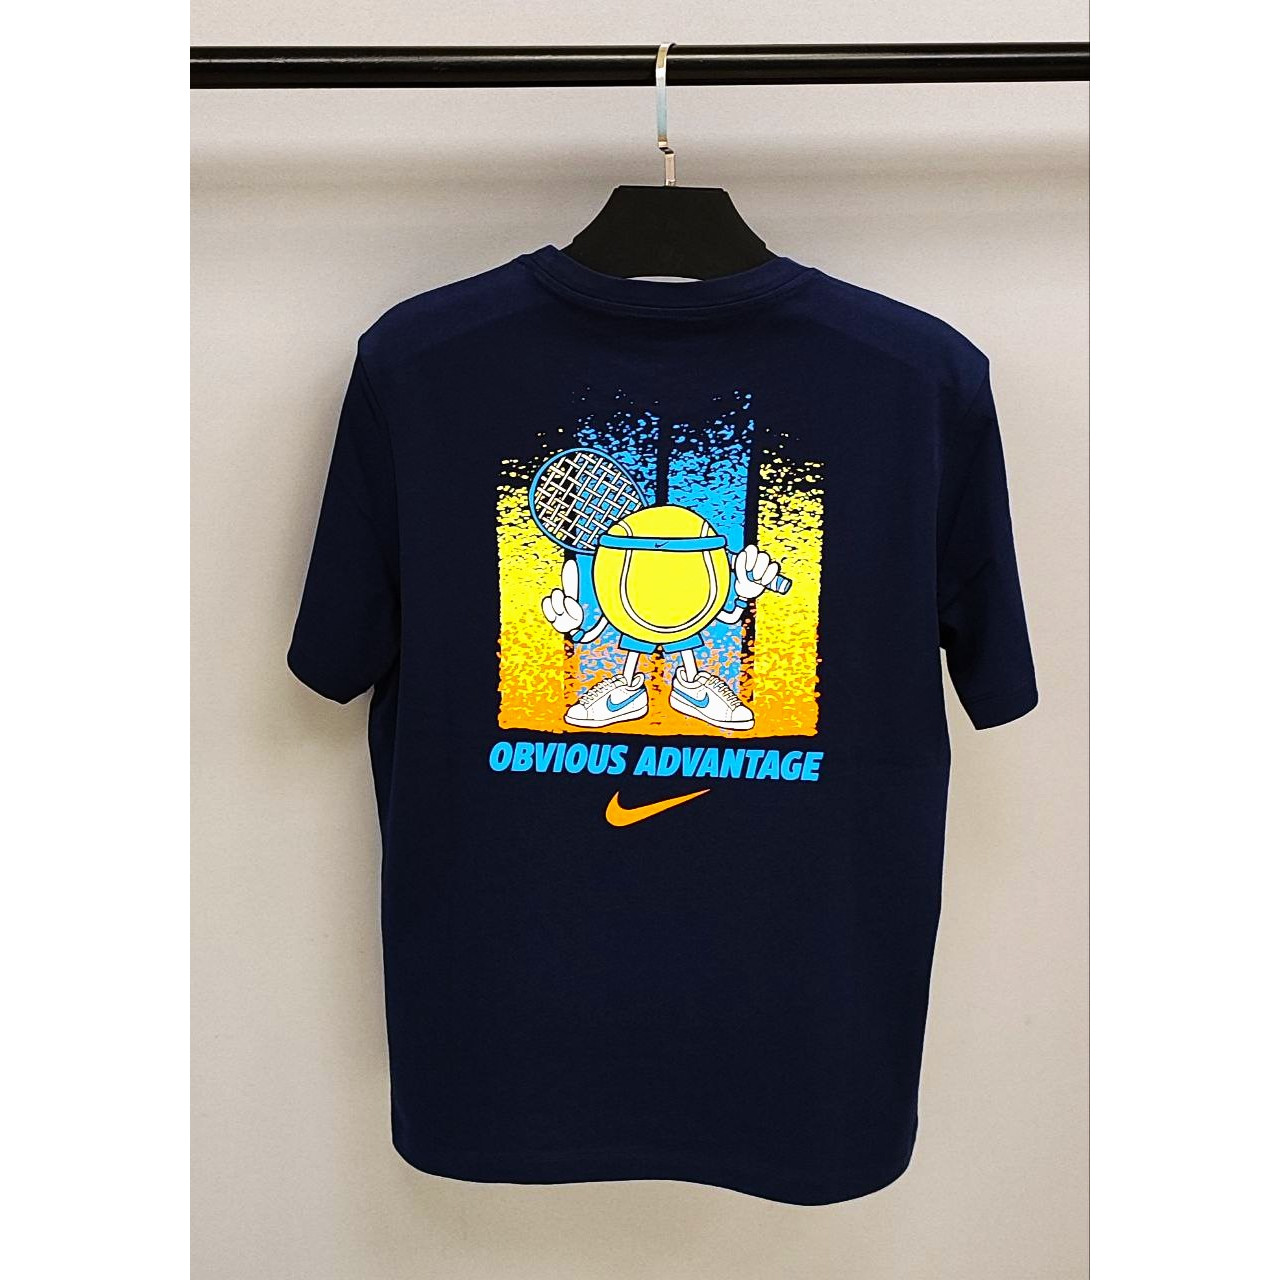 Nike OBVIOUS ADVANTAGE T-shirt Dark blue